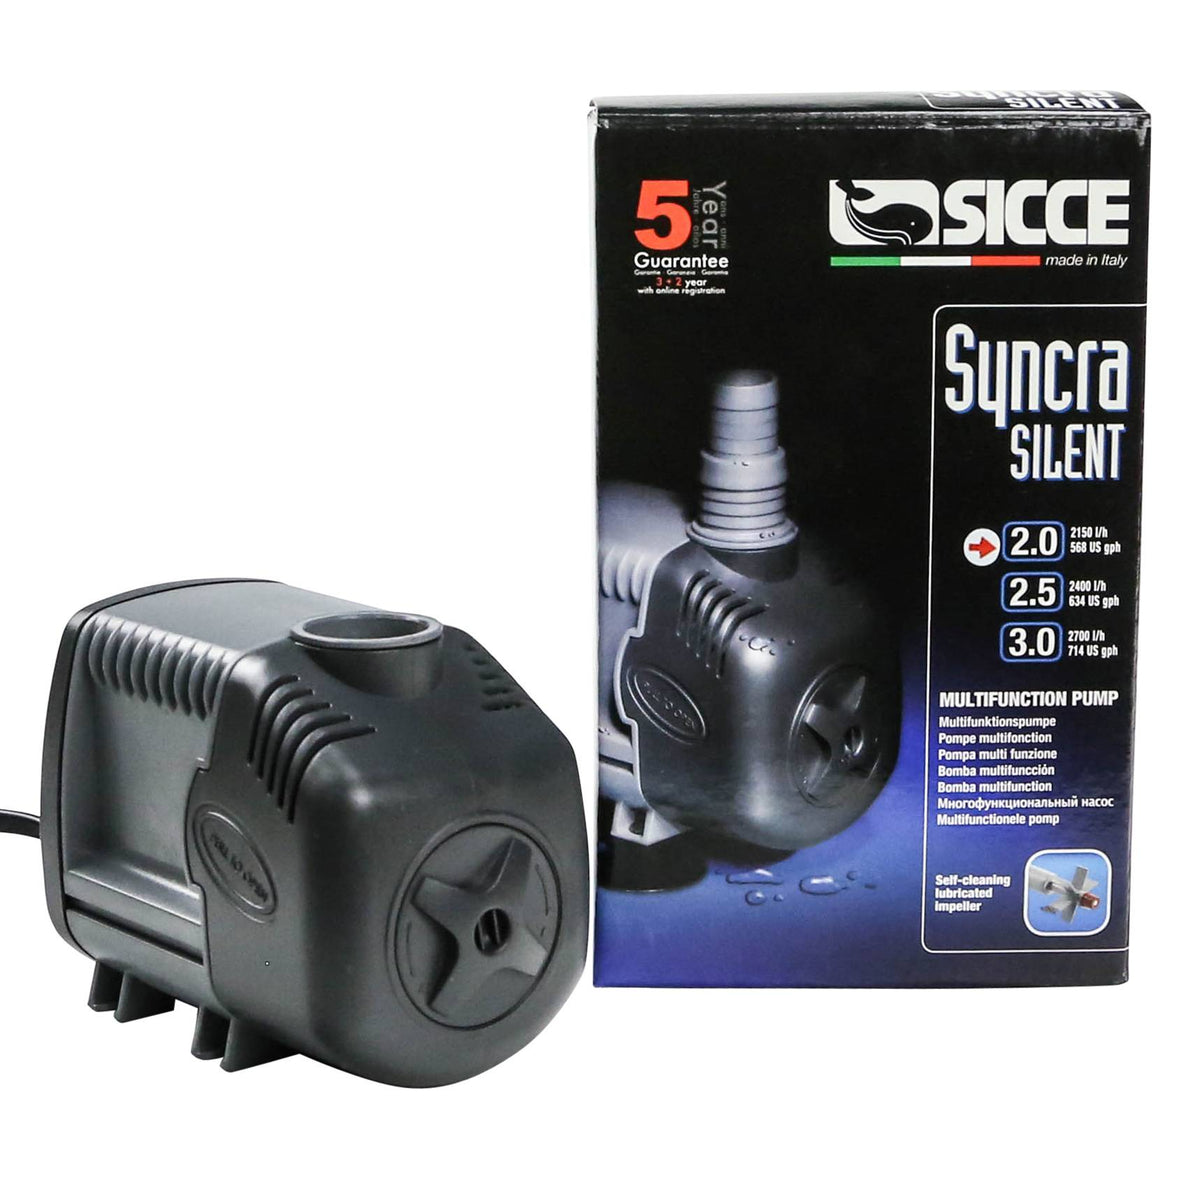 Sicce - Syncra Silent 2.0 Pump - 568 GPH